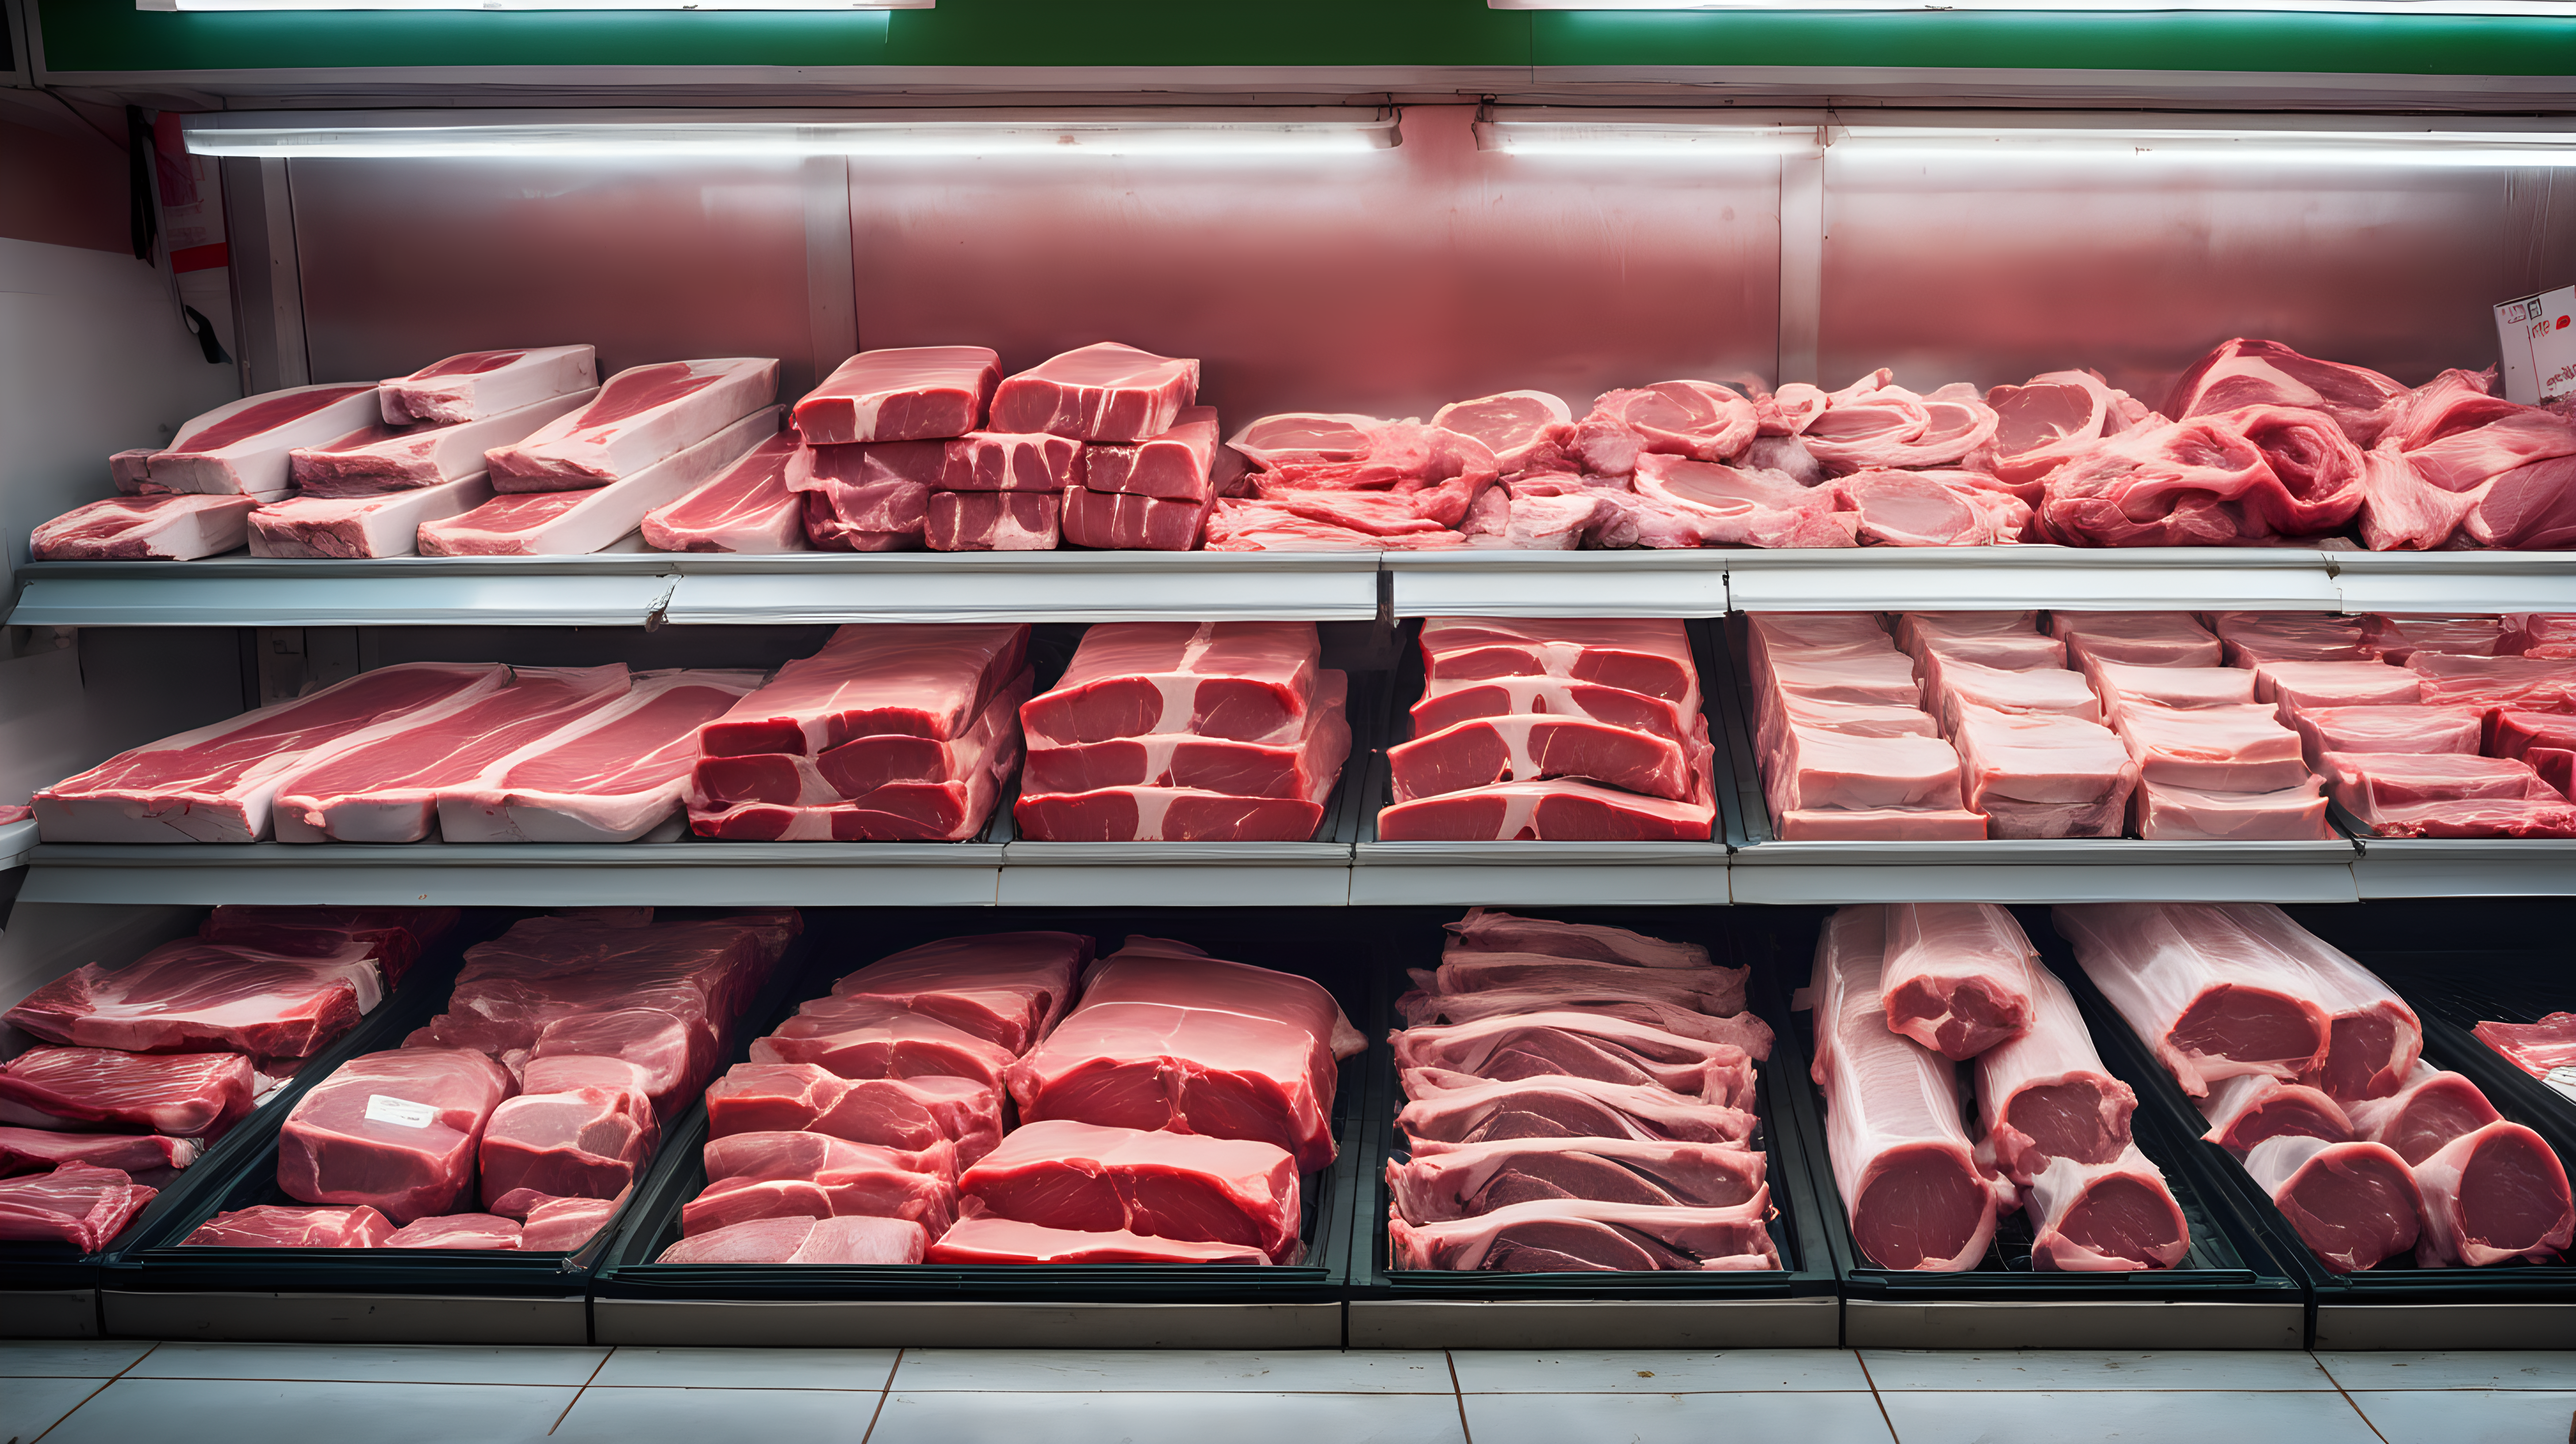 shelves of fresh meat in market